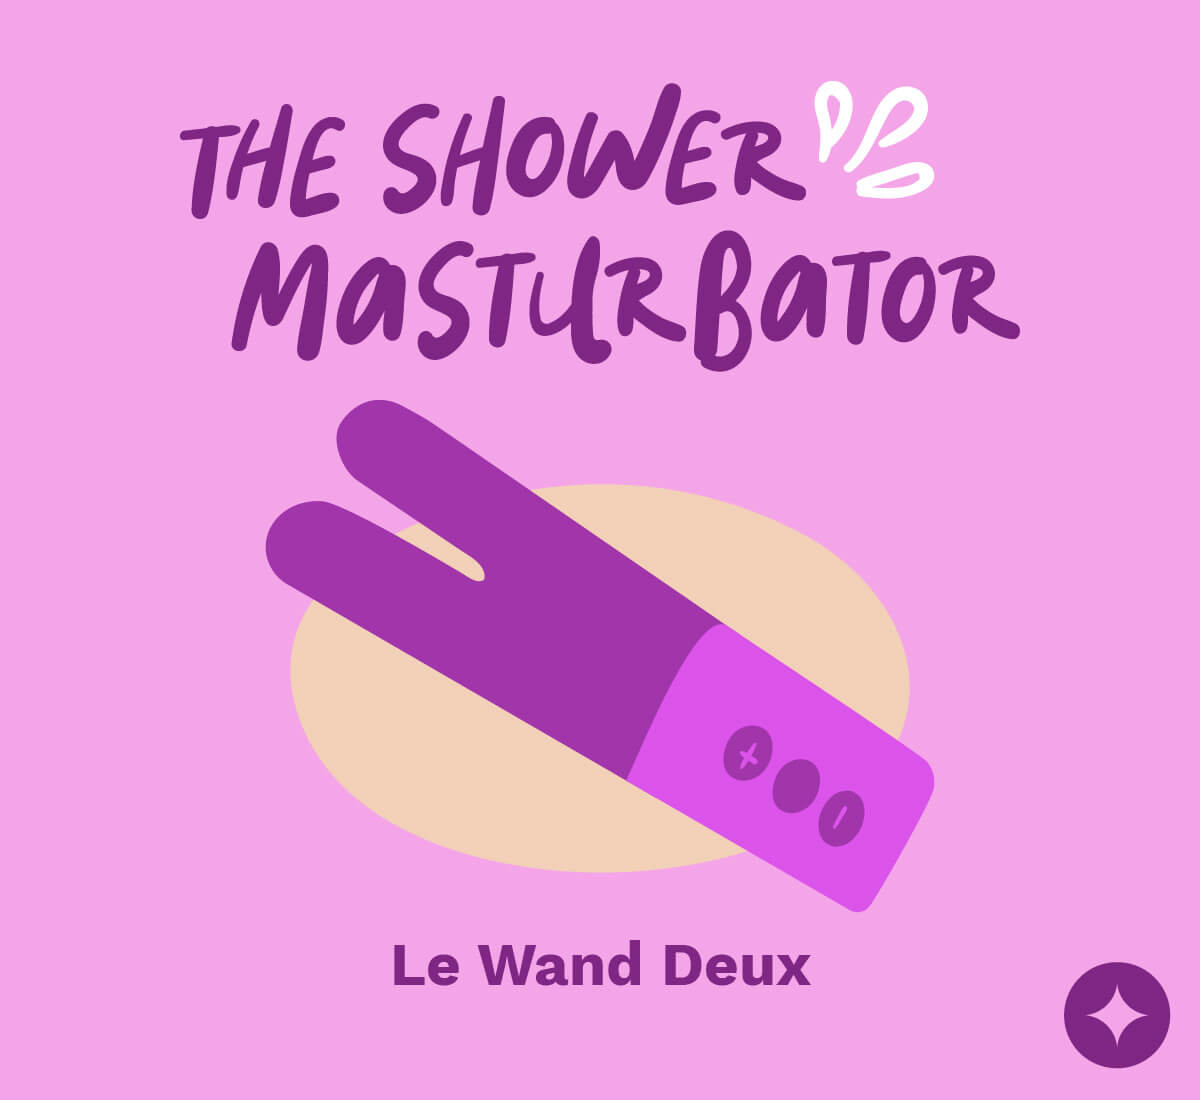 The Shower Masturbator AKA Le Wand Deux